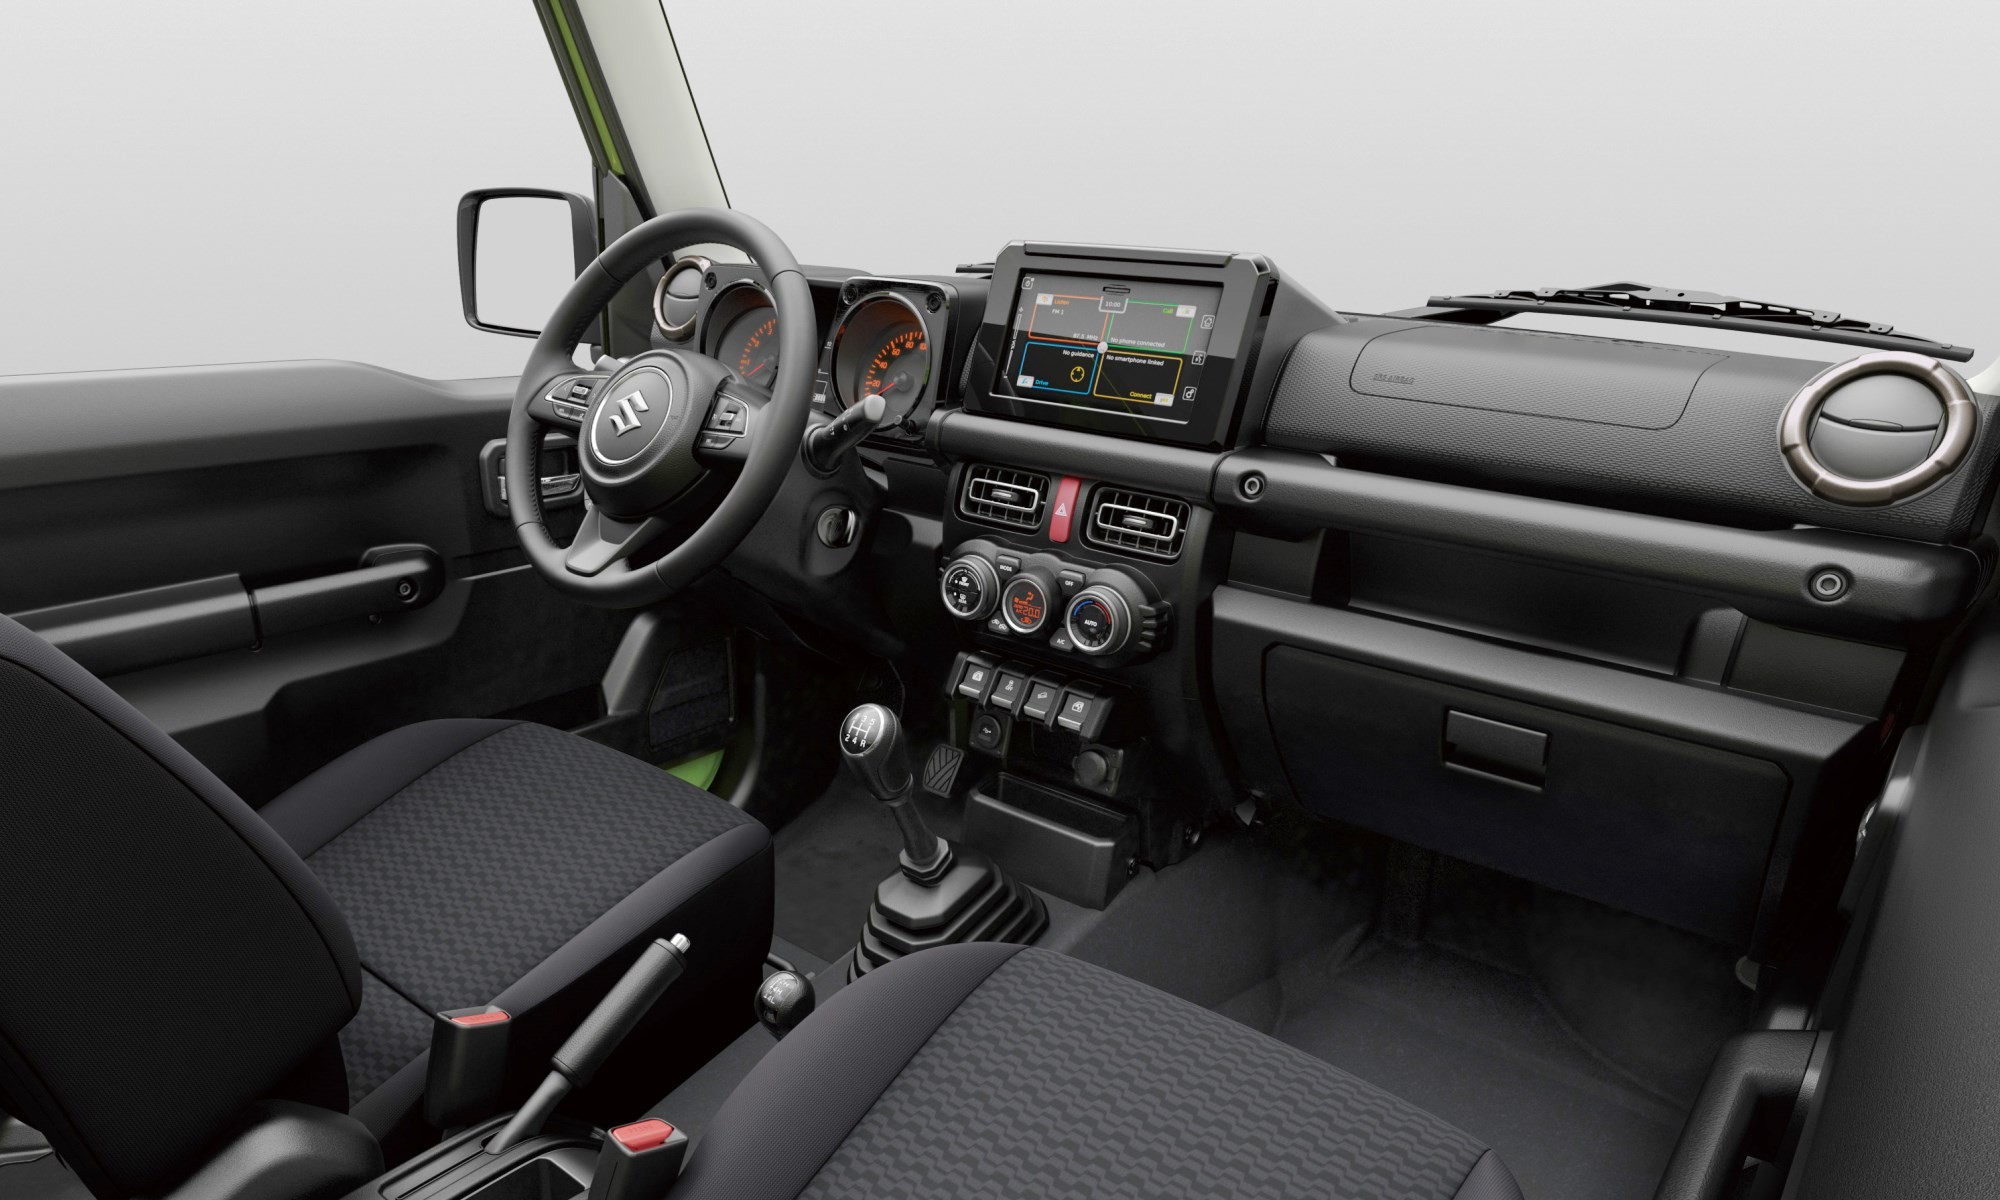 New Suzuki Jimny interior